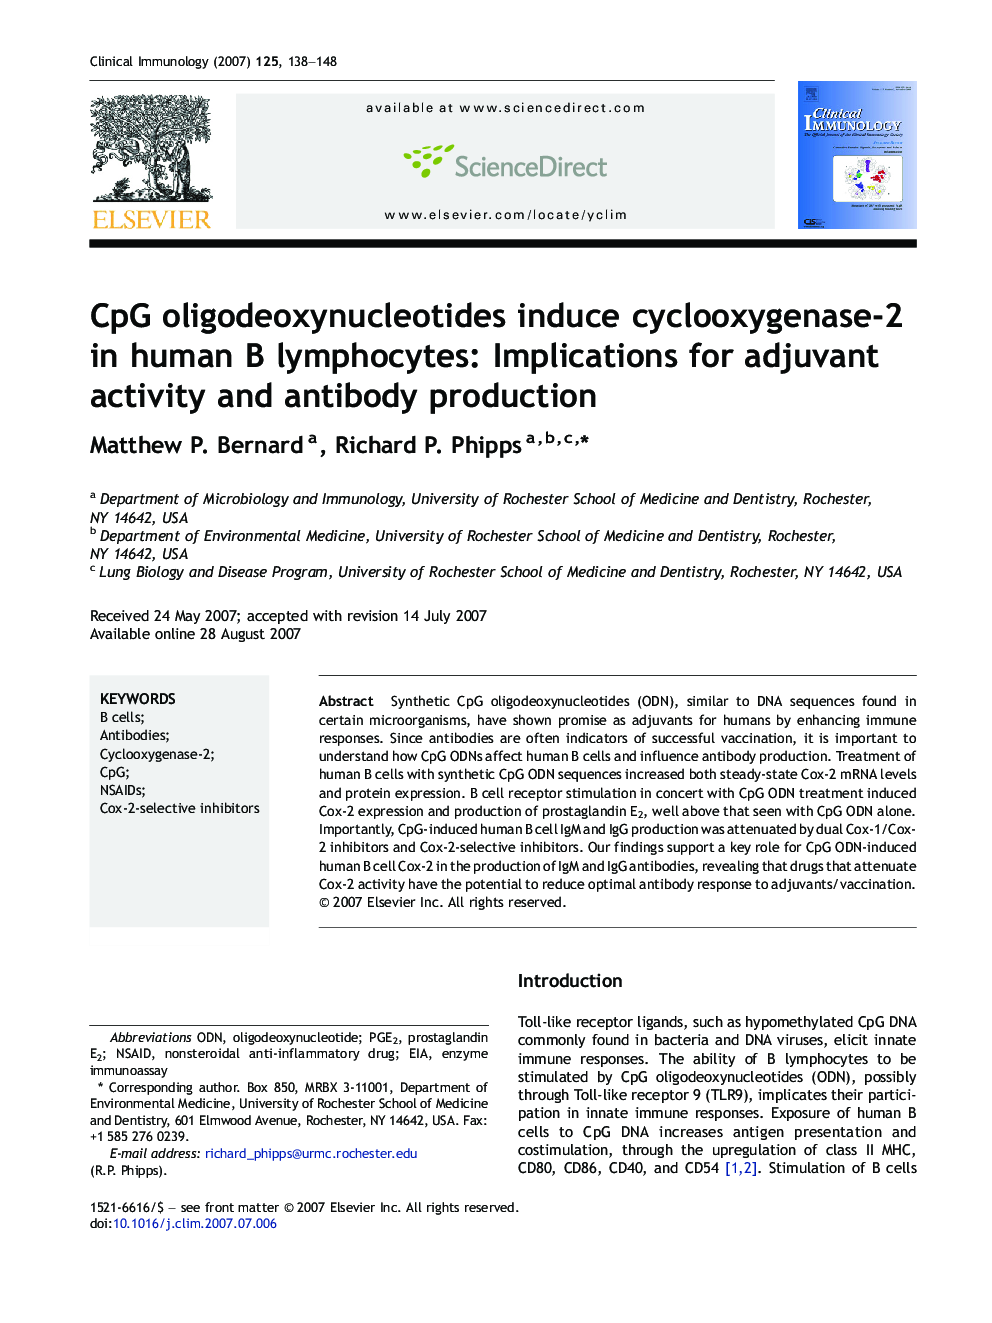 CpG oligodeoxynucleotides induce cyclooxygenase-2 in human B lymphocytes: Implications for adjuvant activity and antibody production